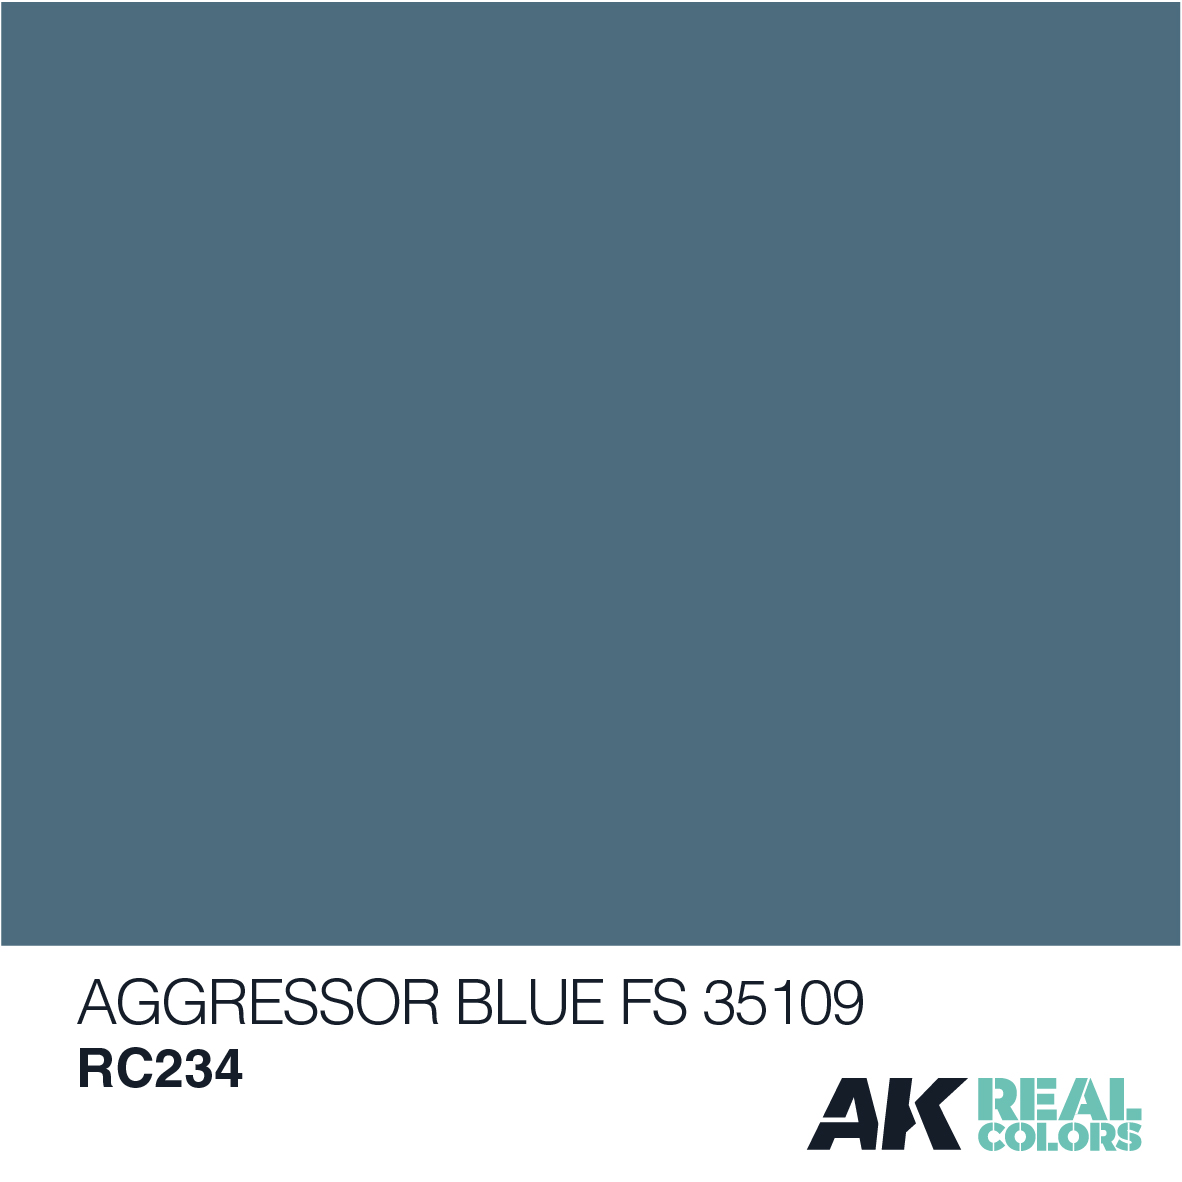 Aggressor Blue FS 35109